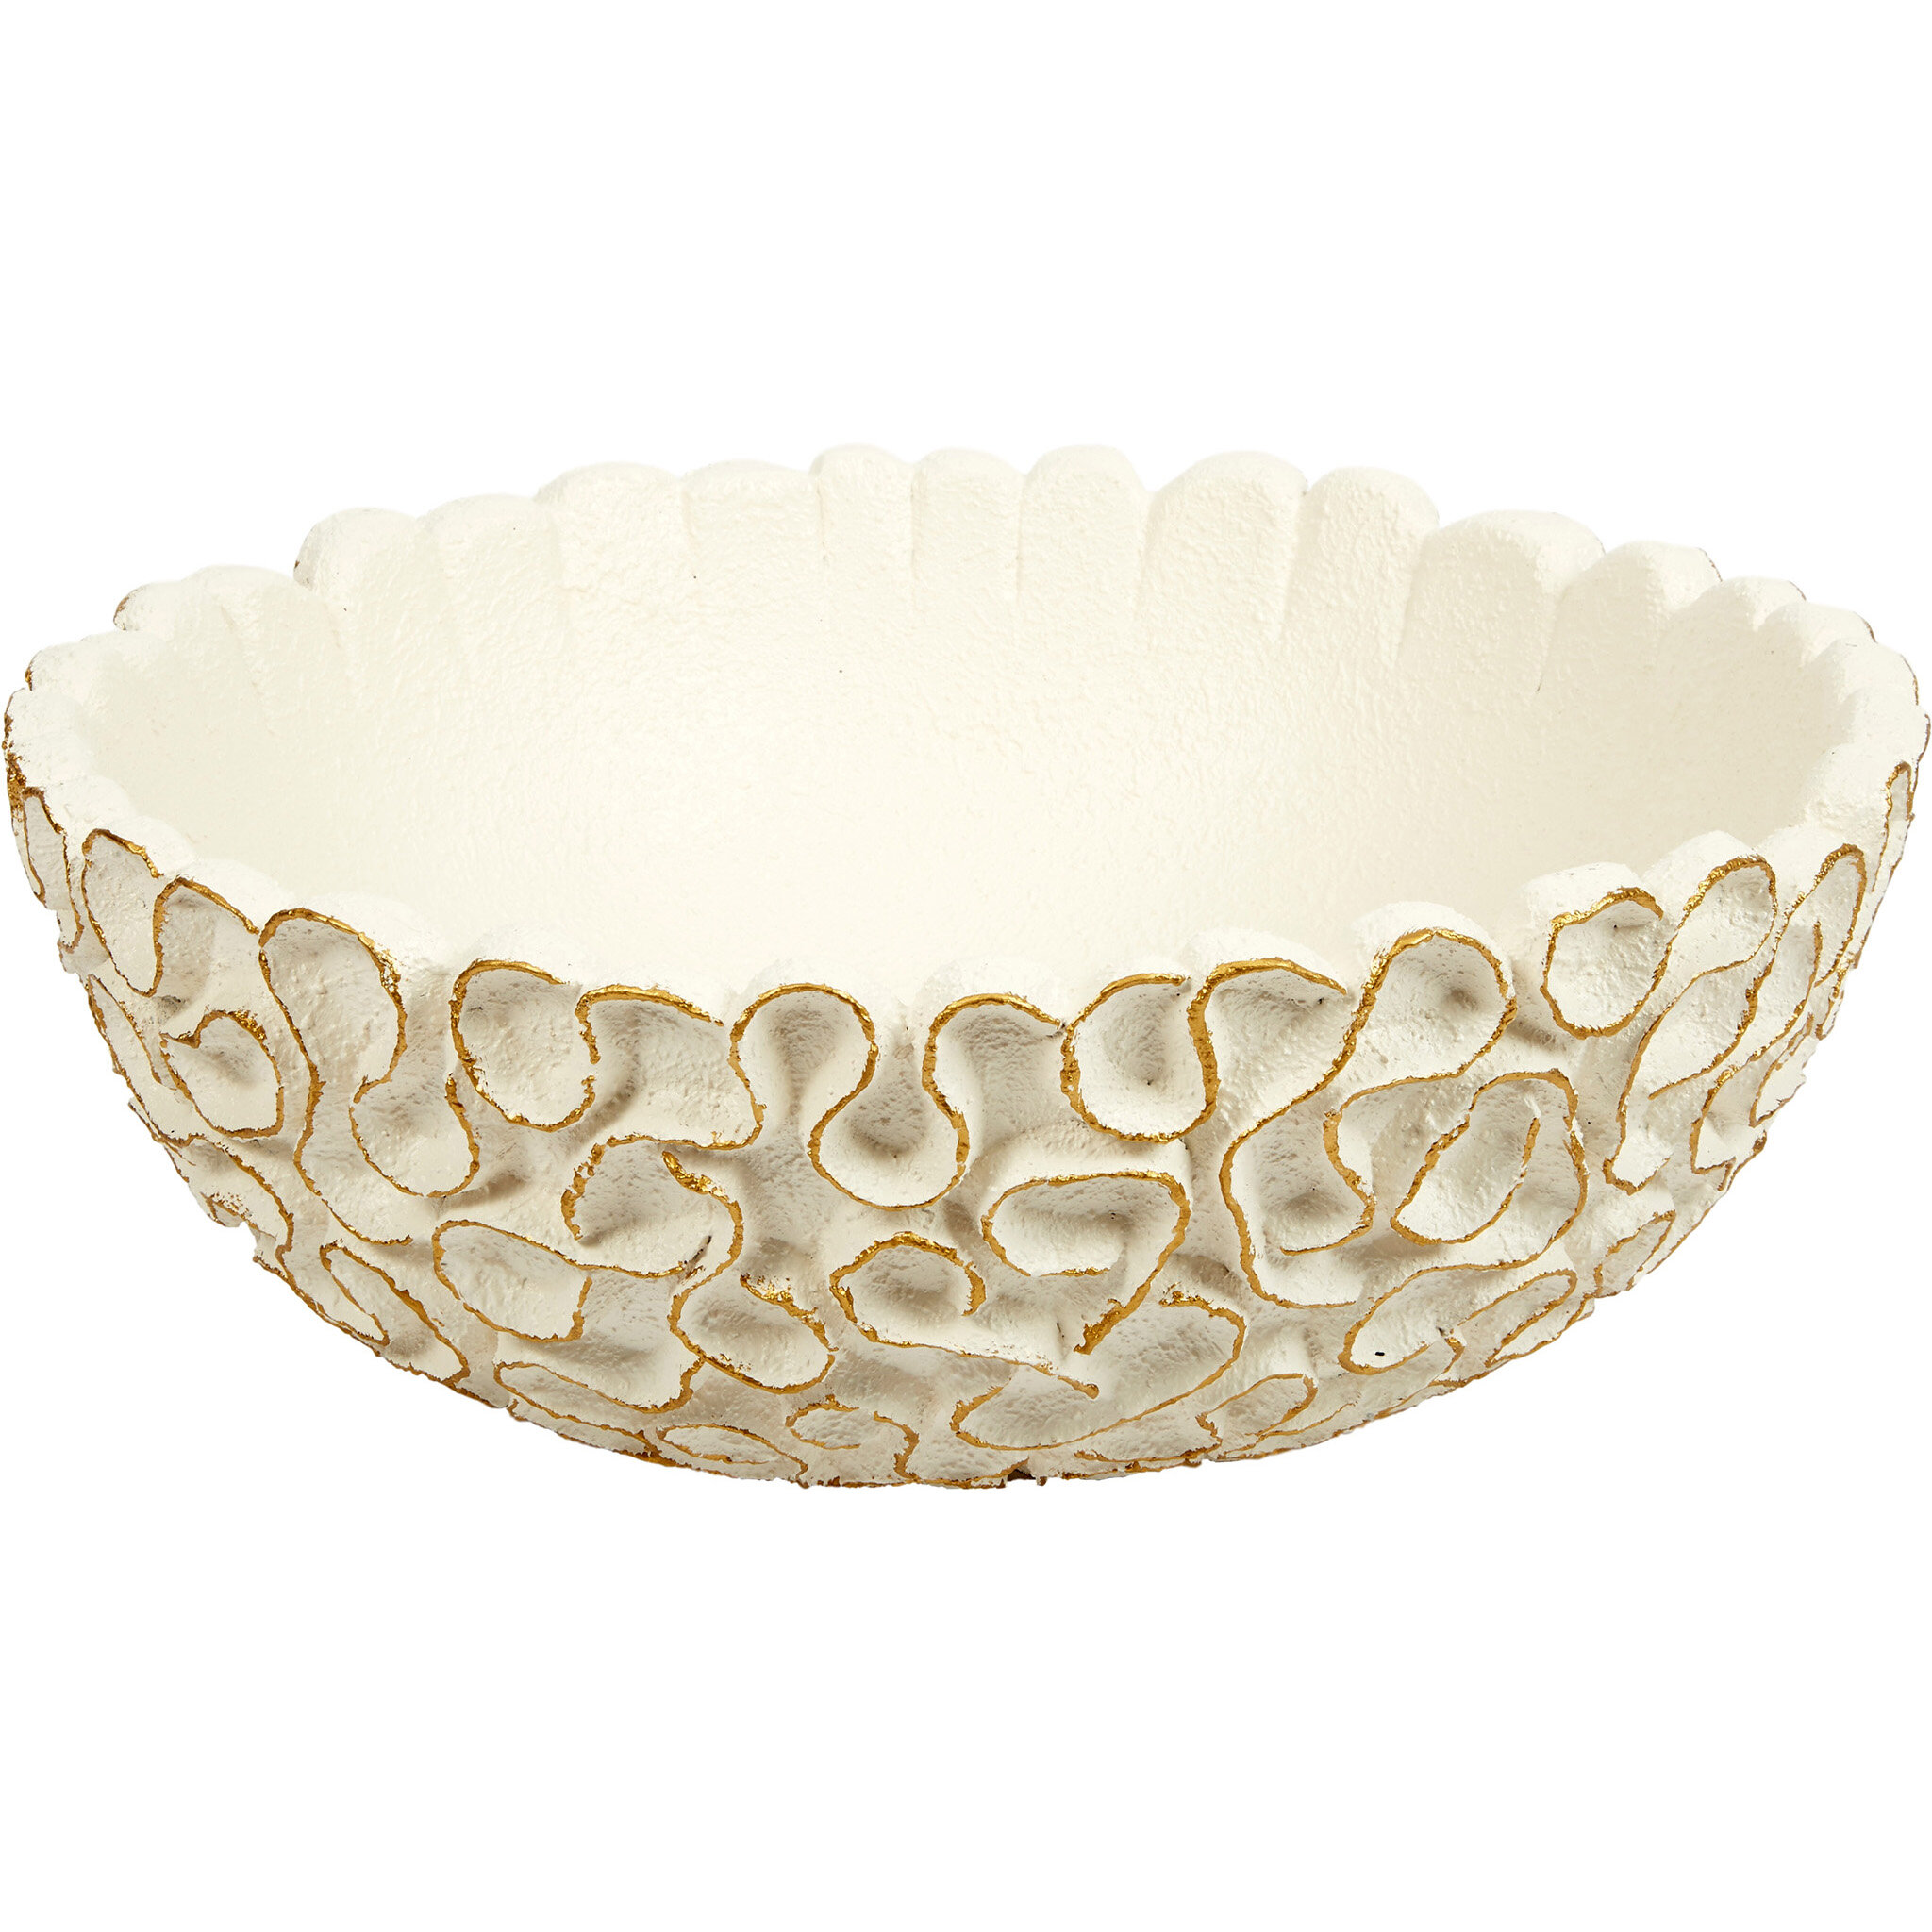 Old World Designs Decorative Bowl | Wayfair